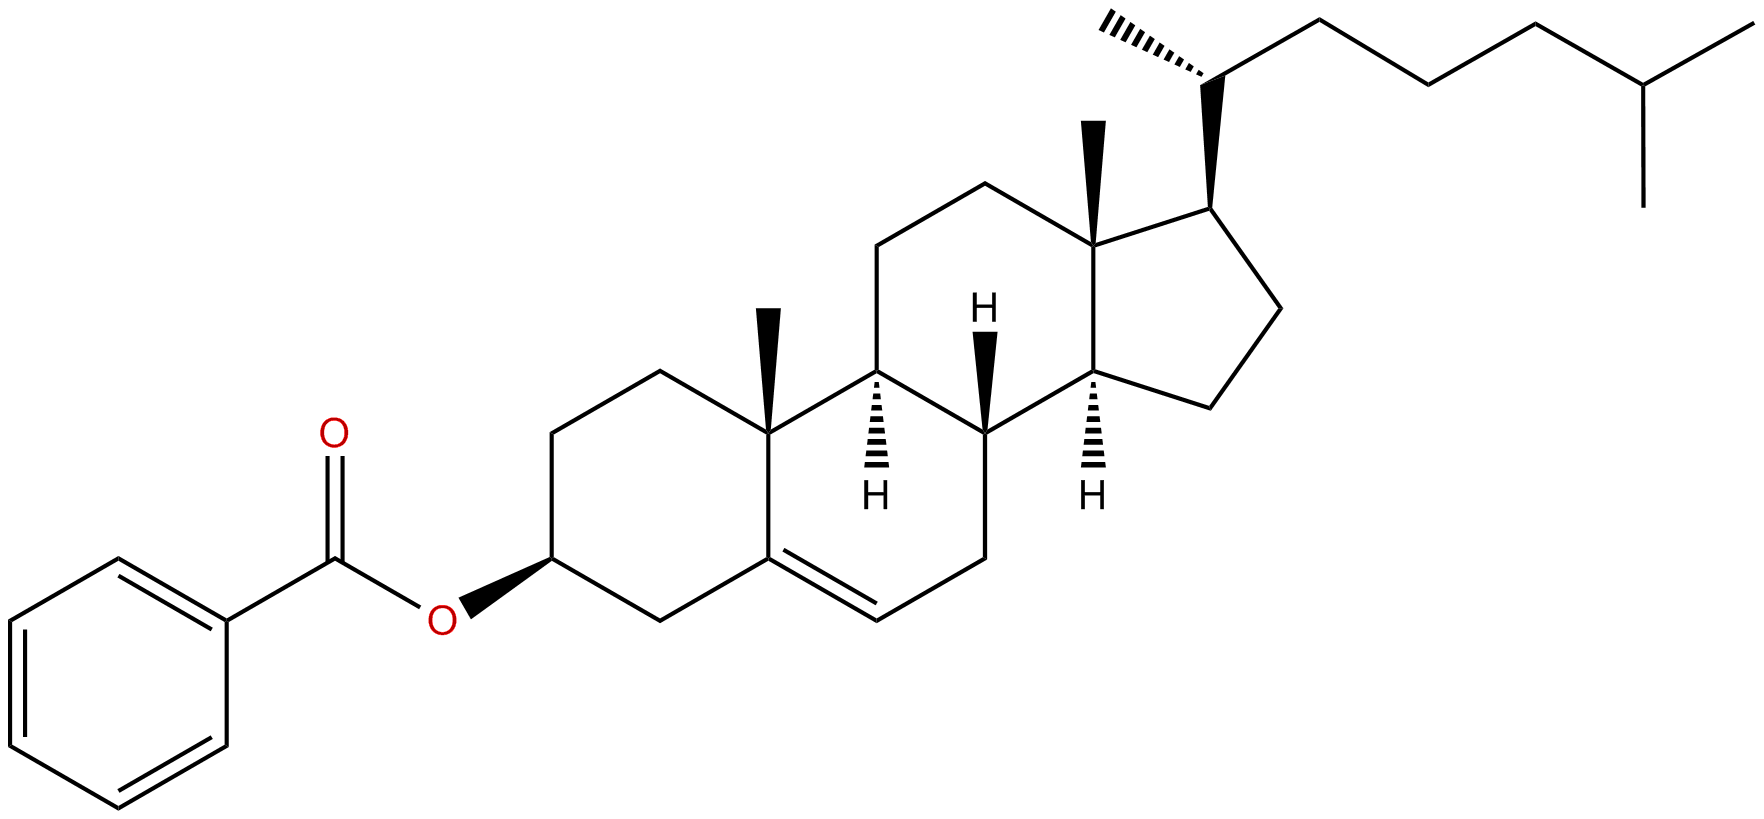 Image of cholesteryl benzoate